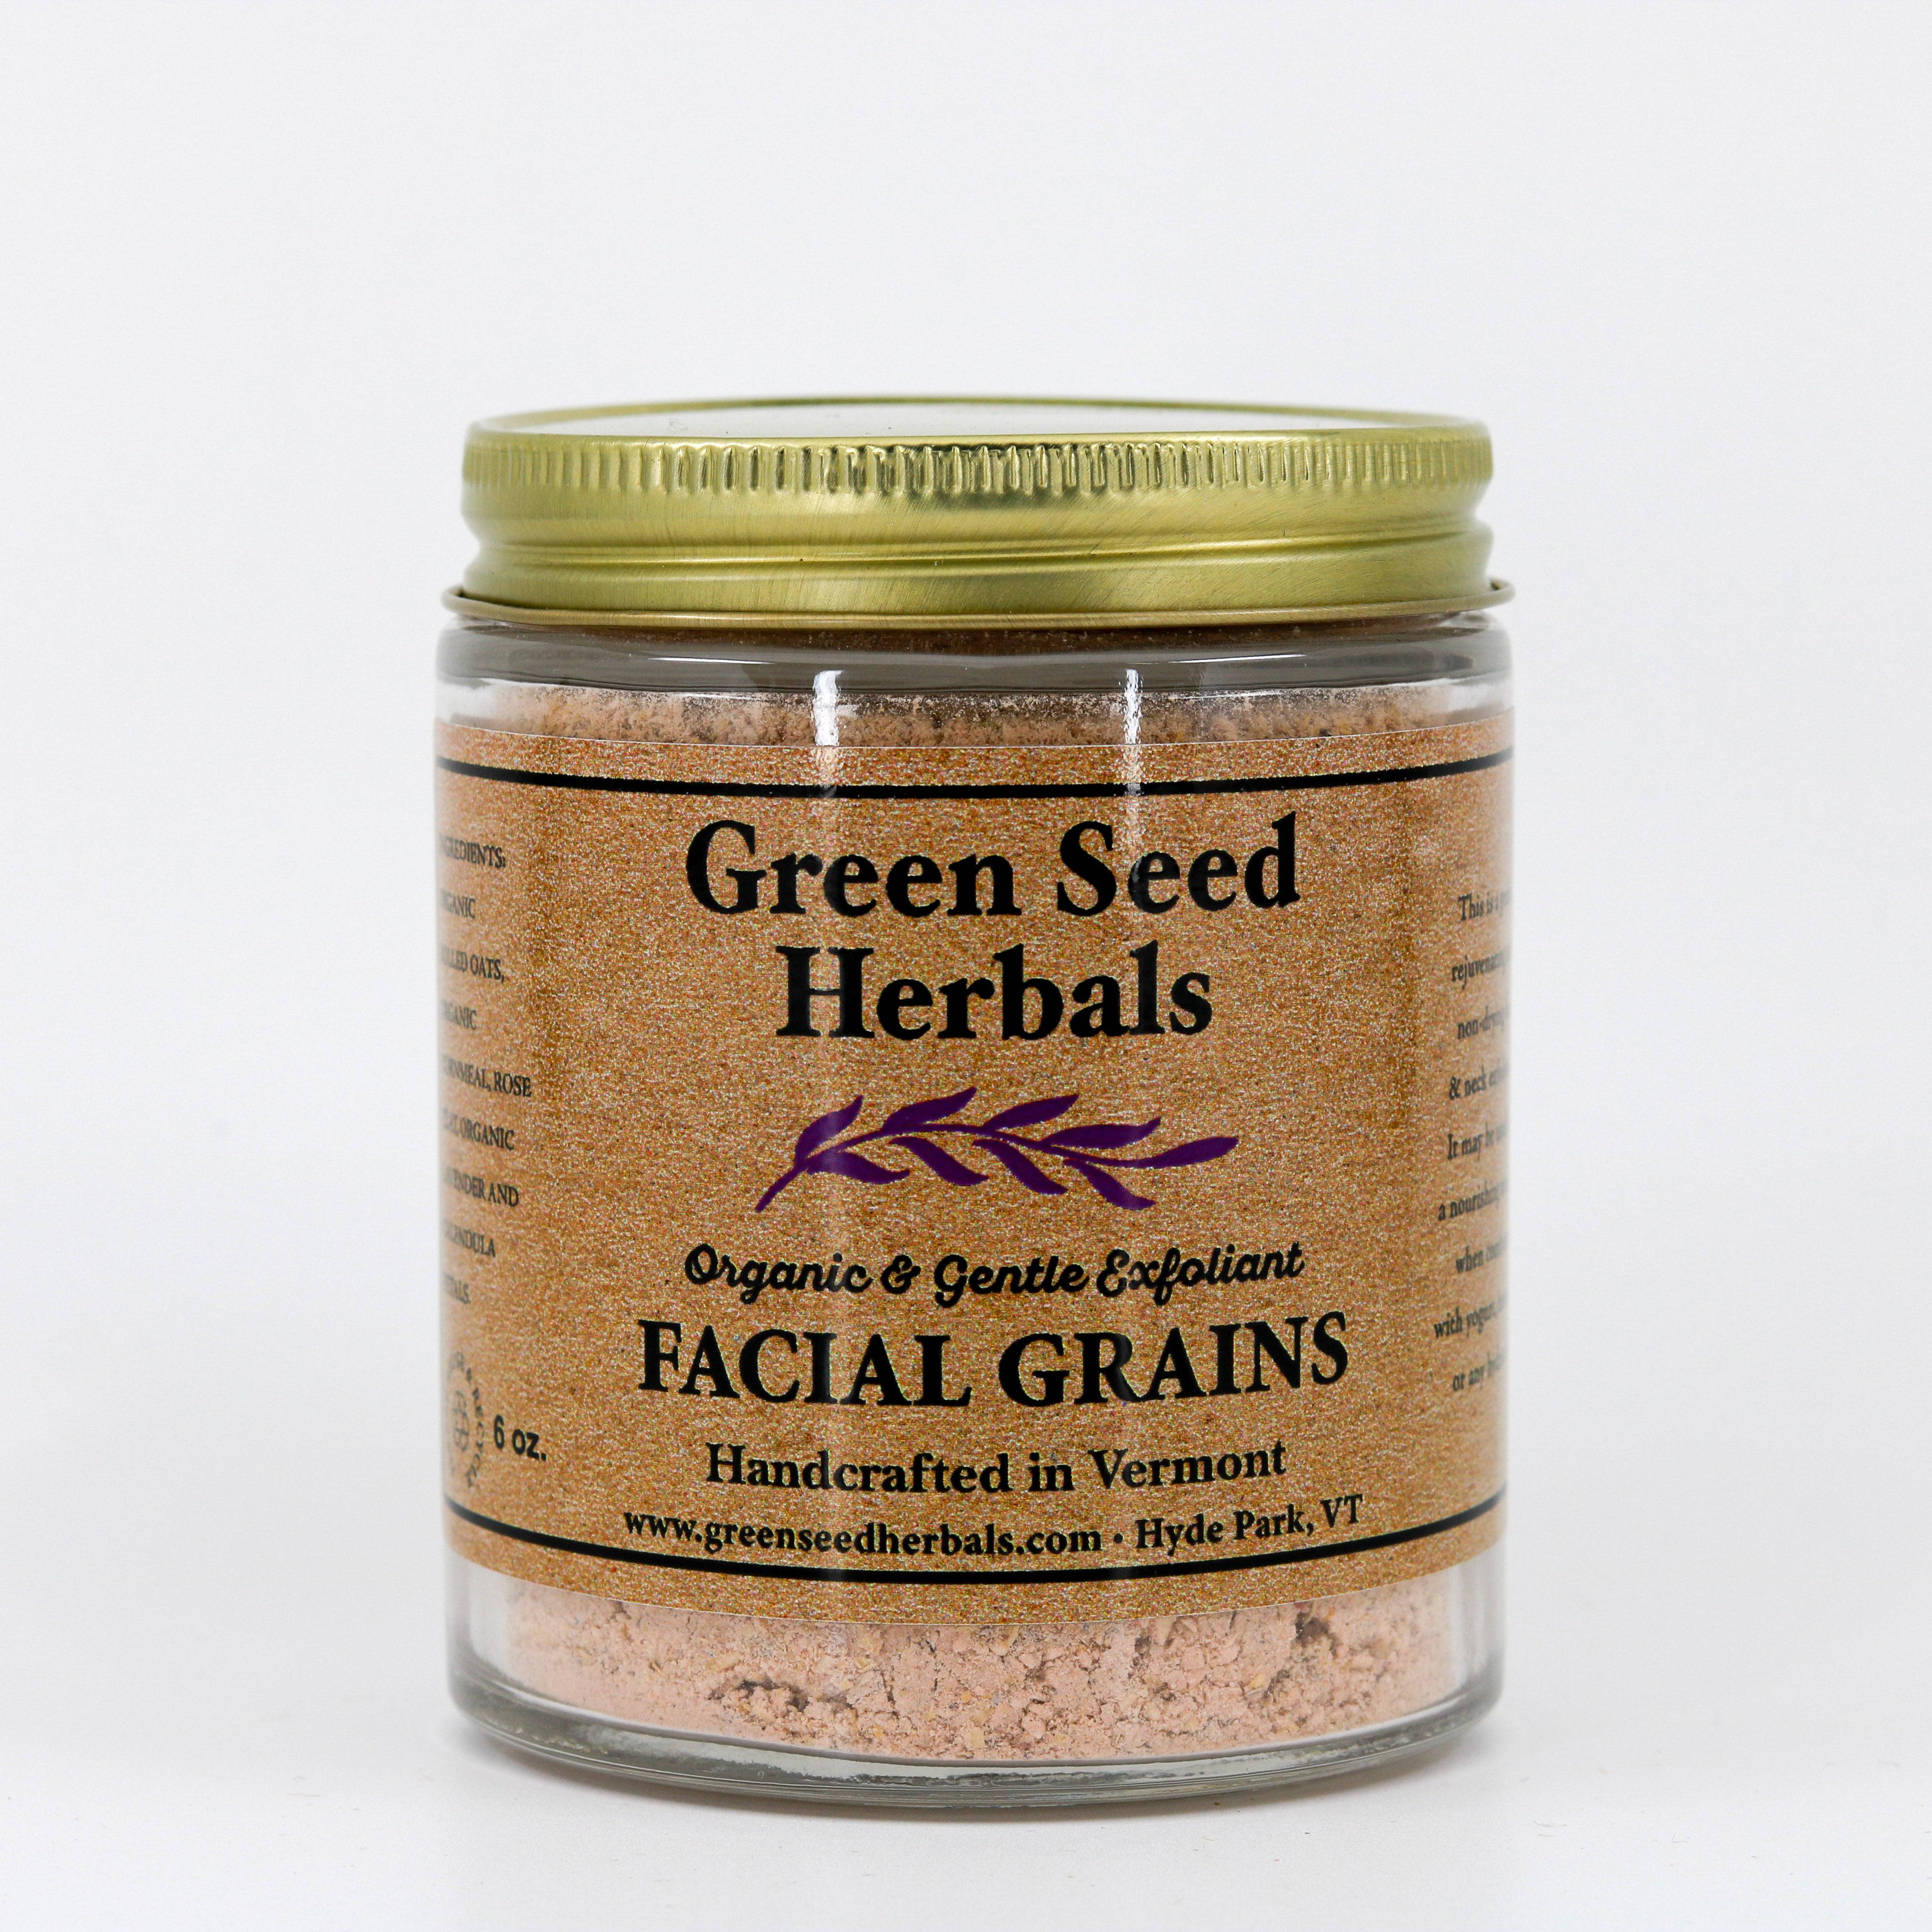 Organic Facial Grains - The Mockingbird Apothecary & General Store